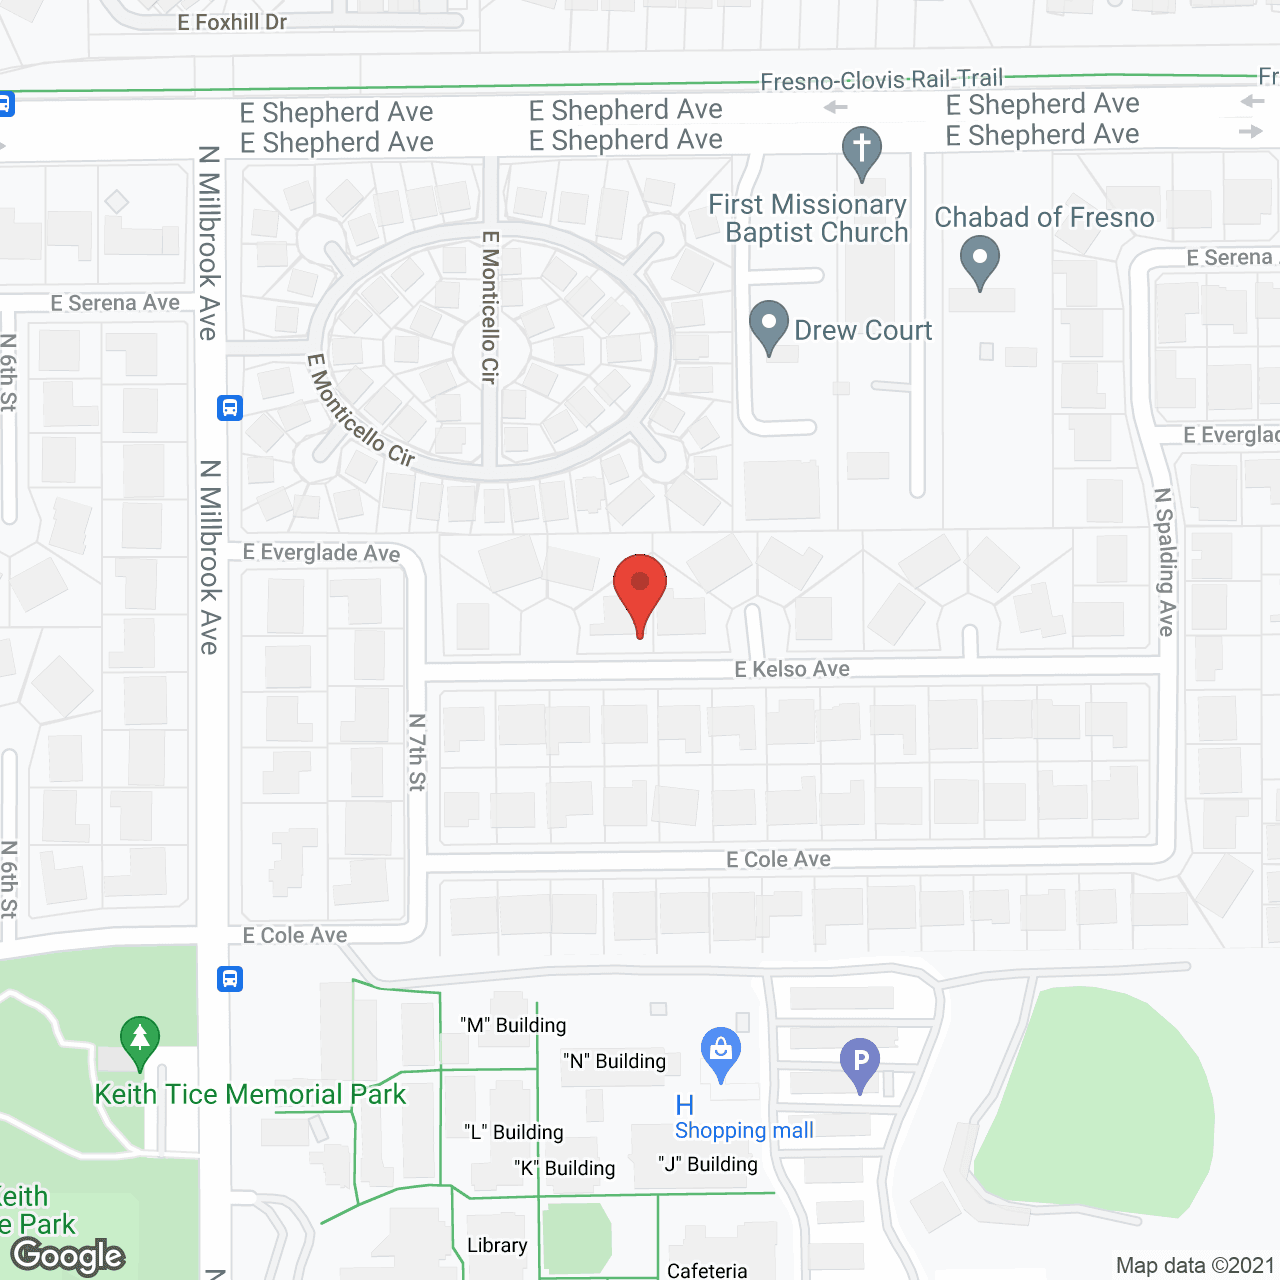 Vista Elderly Care Facility in google map